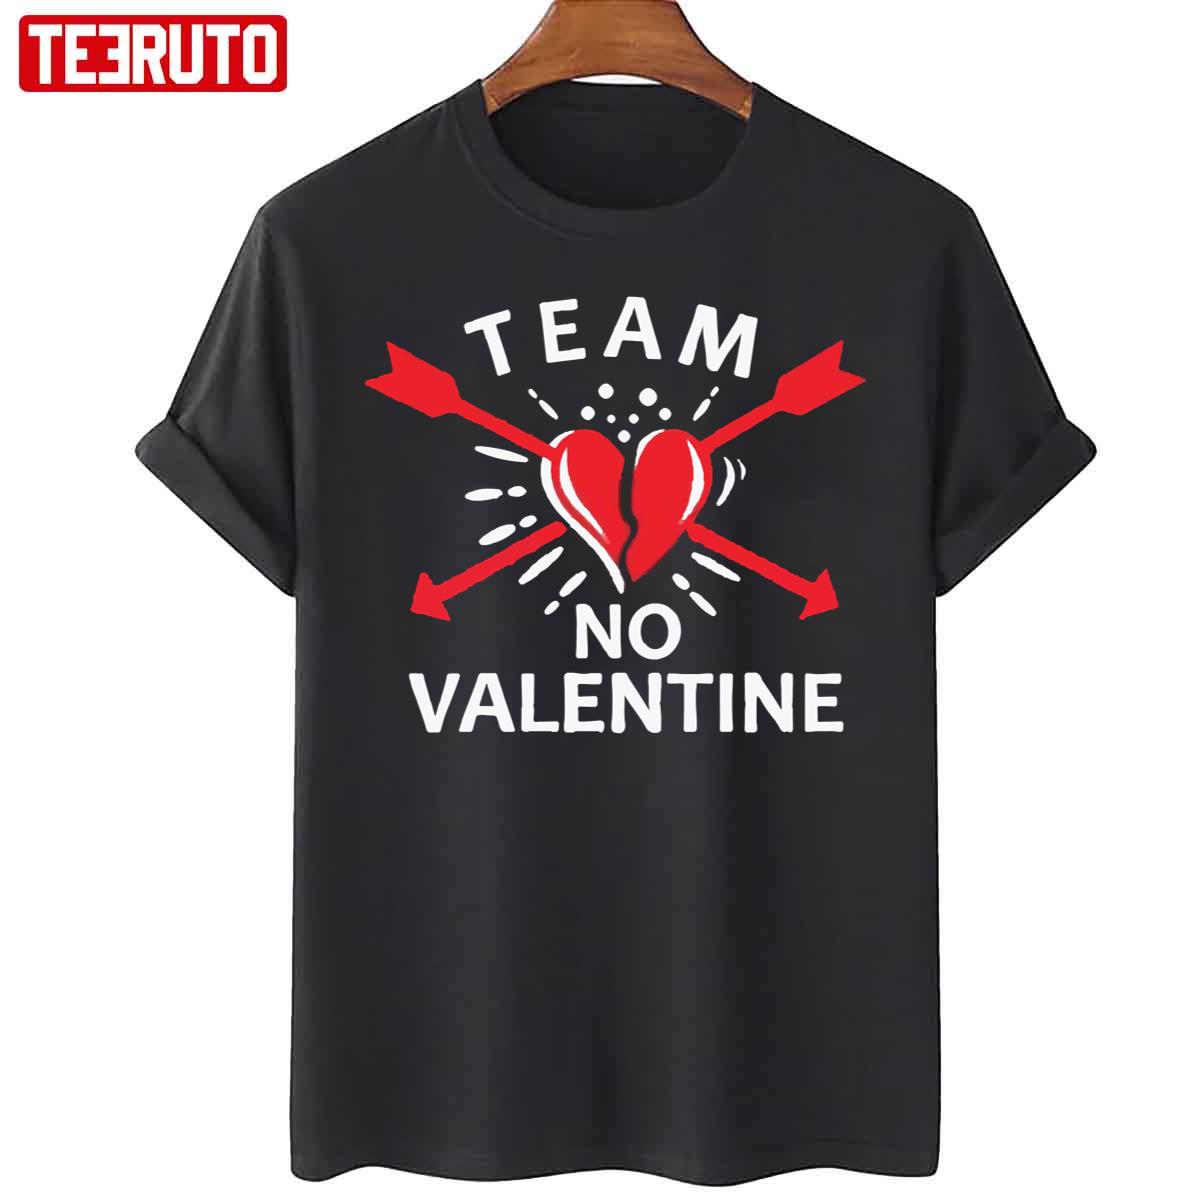 Team No Valentine Funny Anti Valentine's Day Unisex T-Shirt - Teeruto